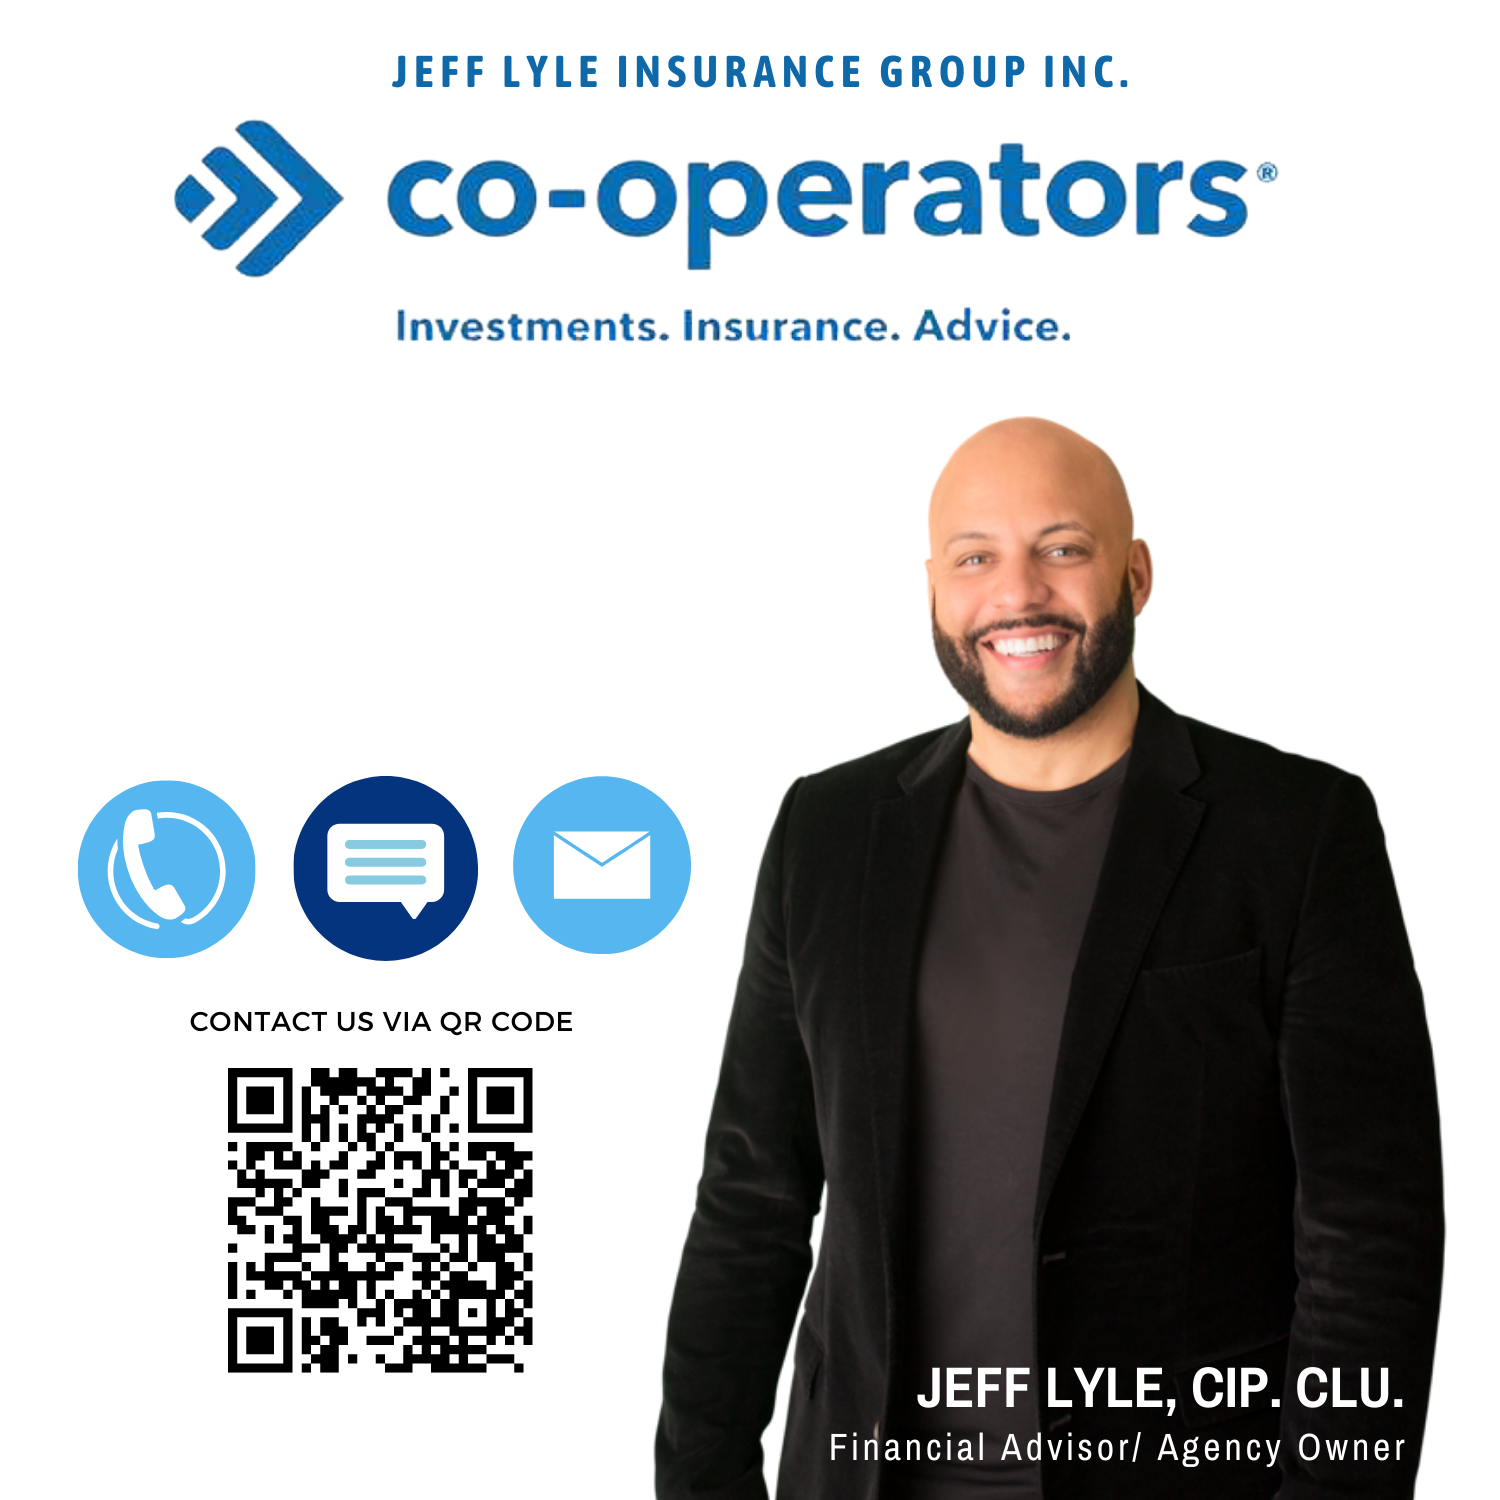 Jeff Lyle Insurance Group Inc